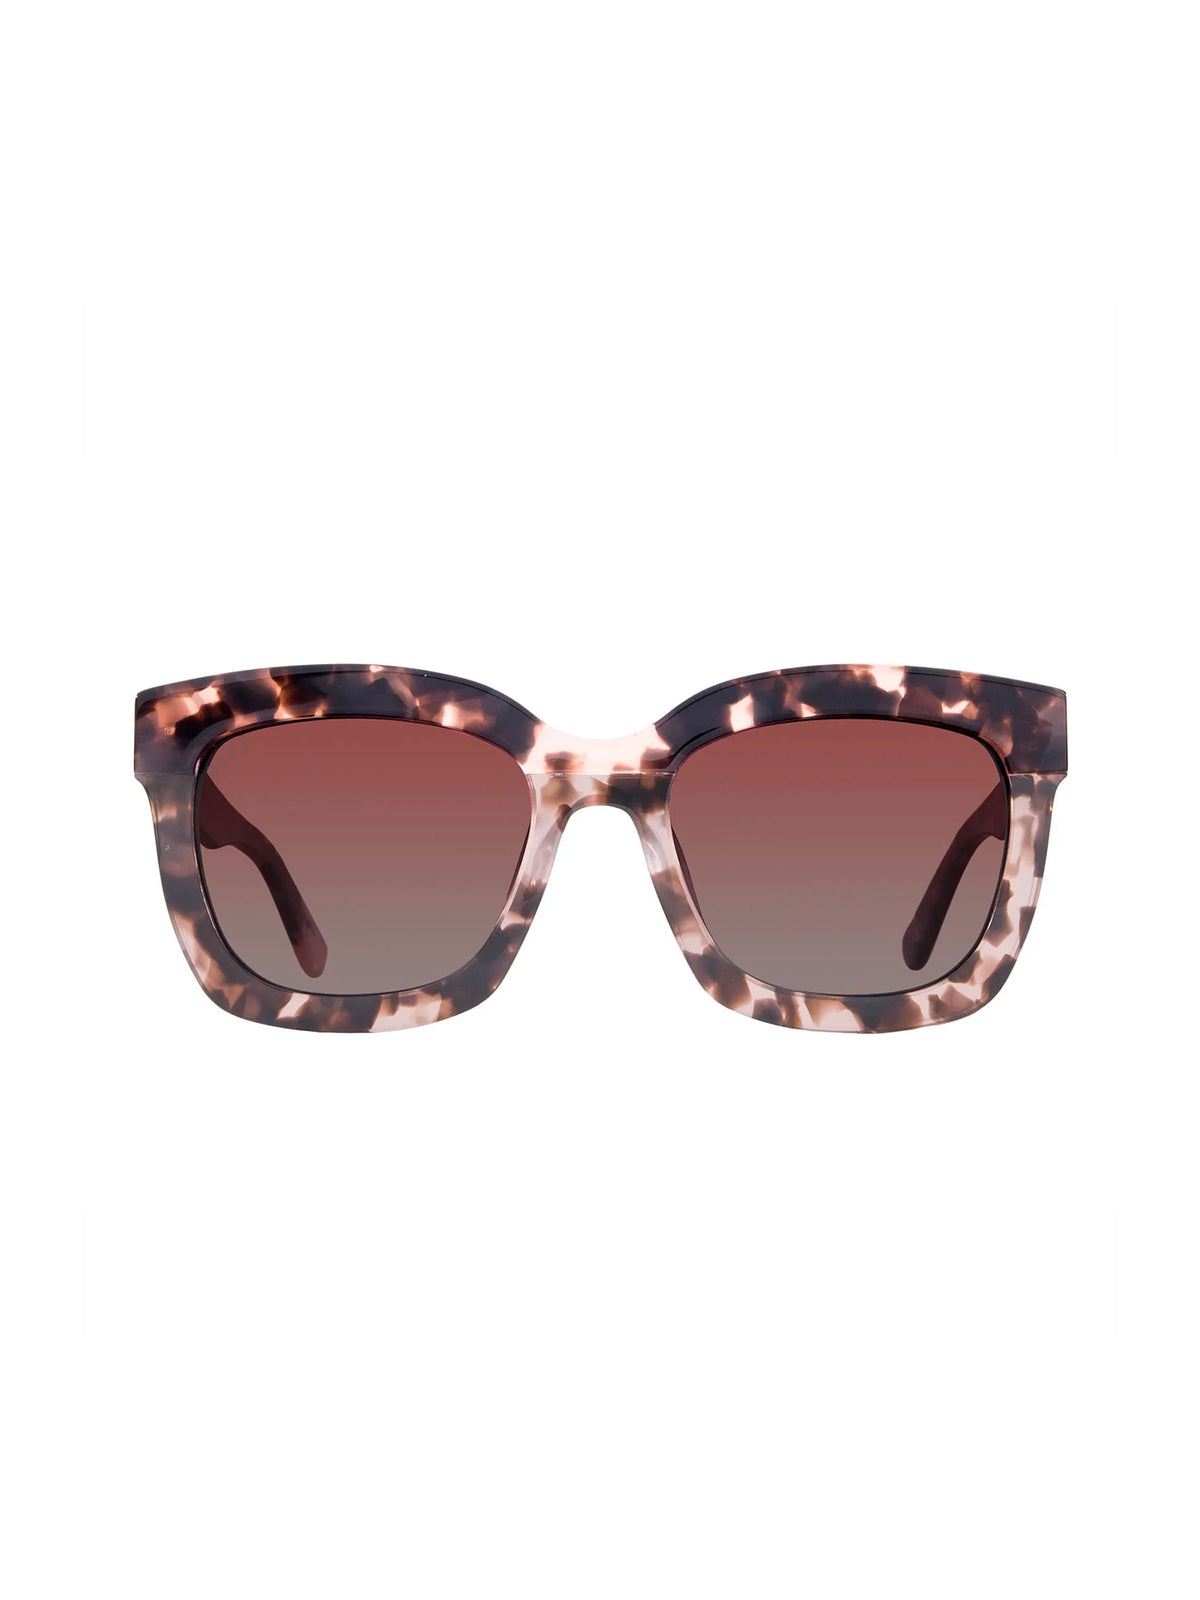 diff eyewear carson sunglasses in himalayan tortoise rose gold gradient polarized